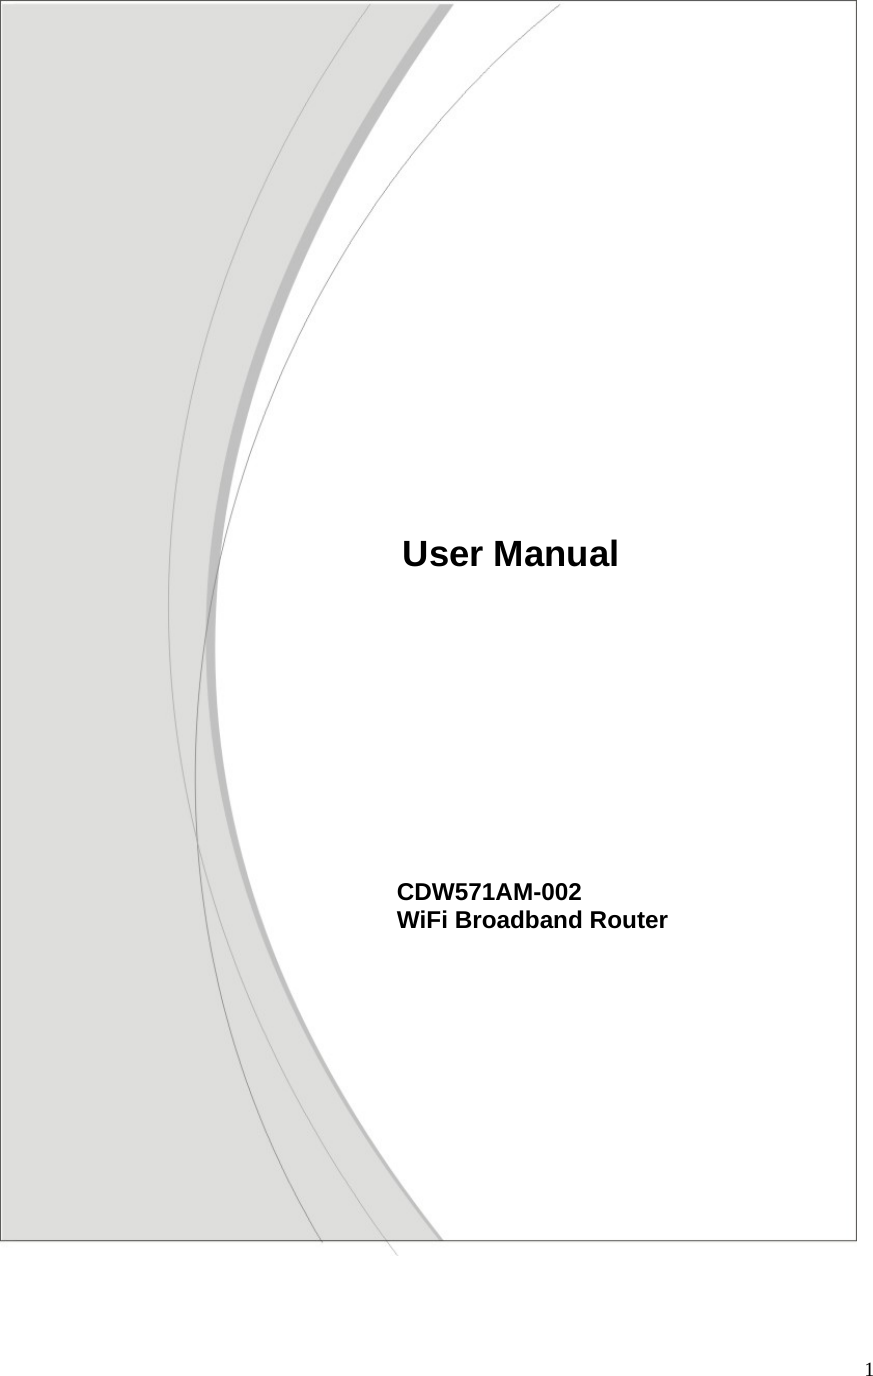  1                                                                                                   CDW571AM-002  WiFi Broadband Router              User Manual 